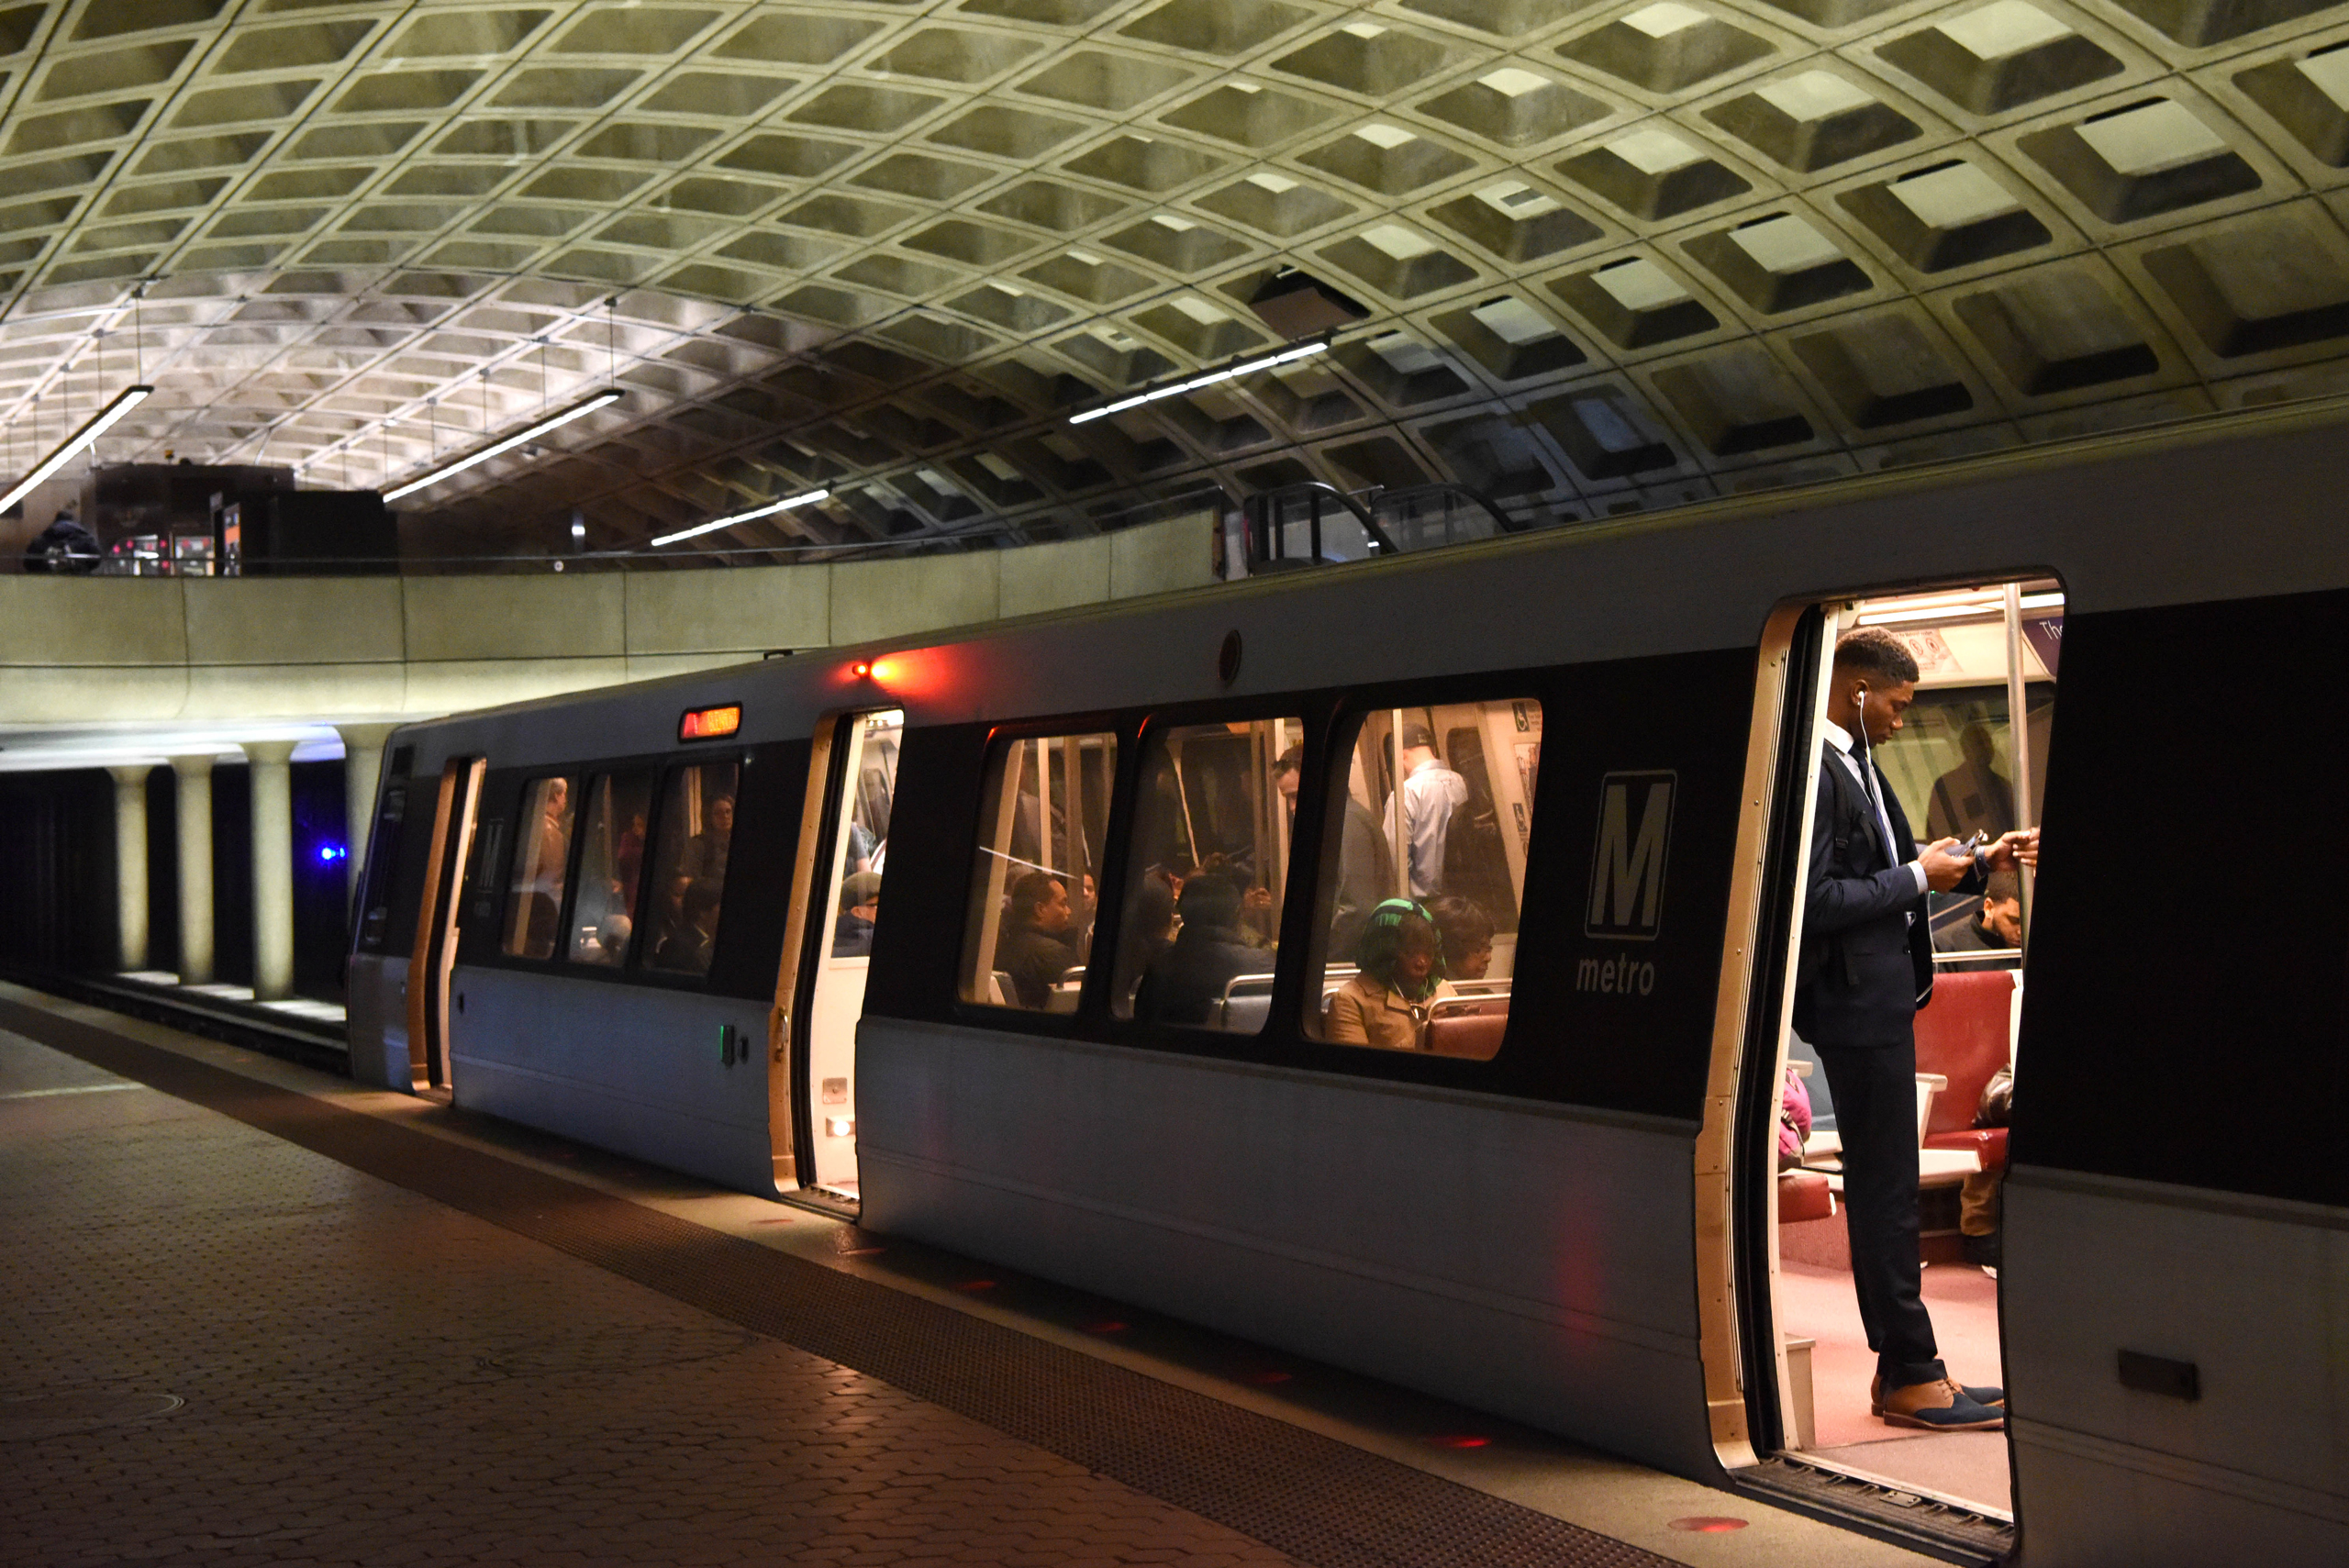 Washington, DC - March 30, 2016: A man waited aboard a Metro tr